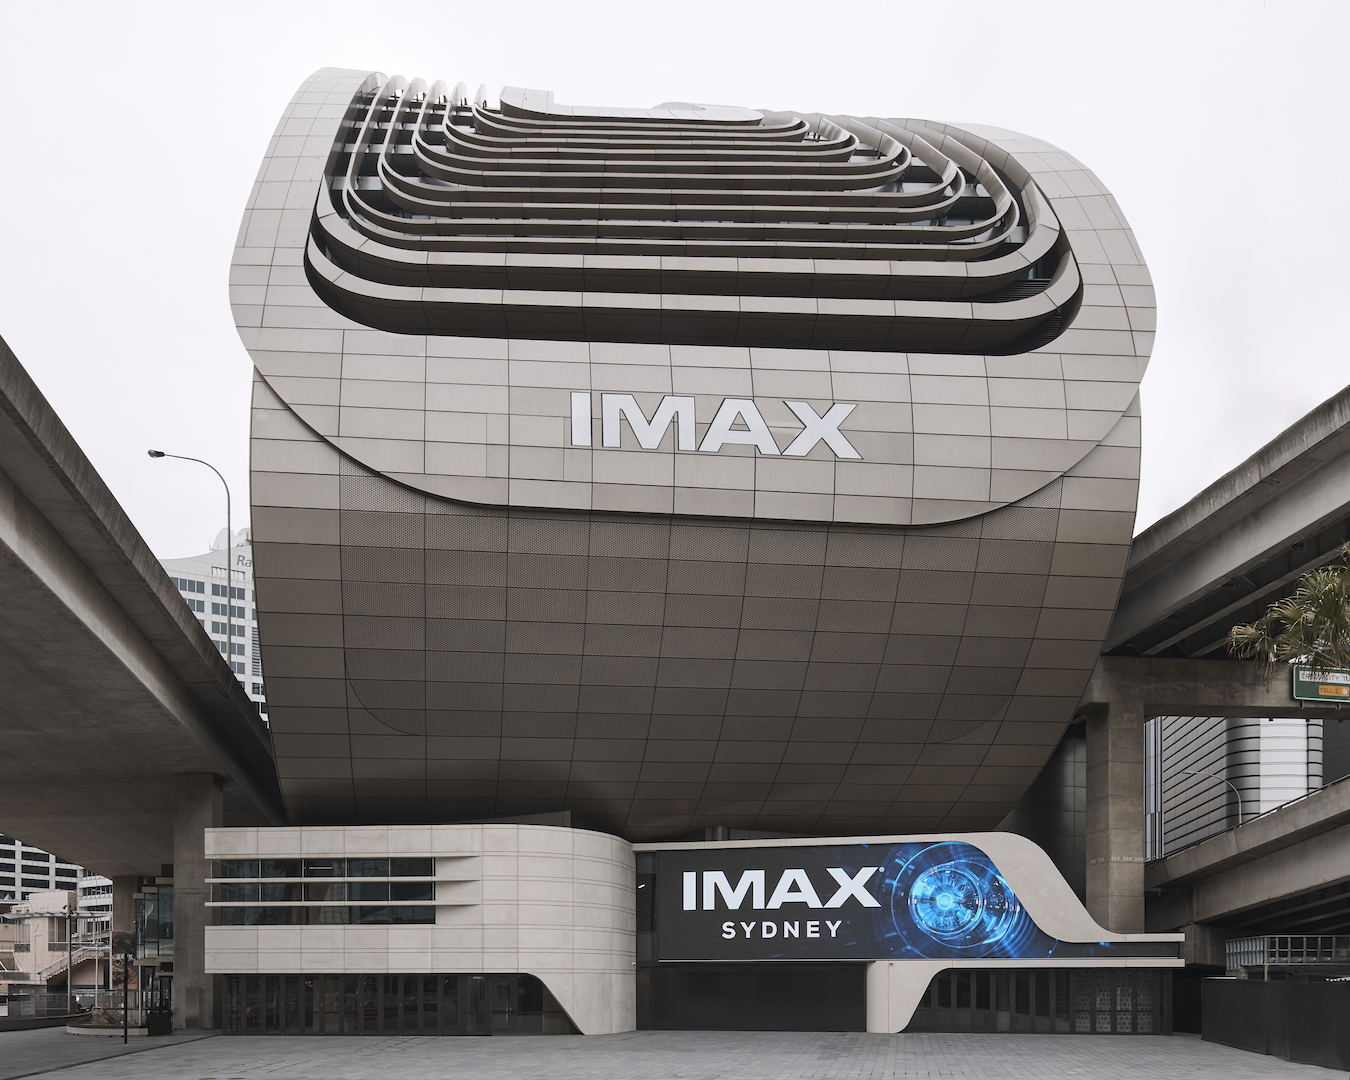 Imax Sydney Darling Harbour Cinema